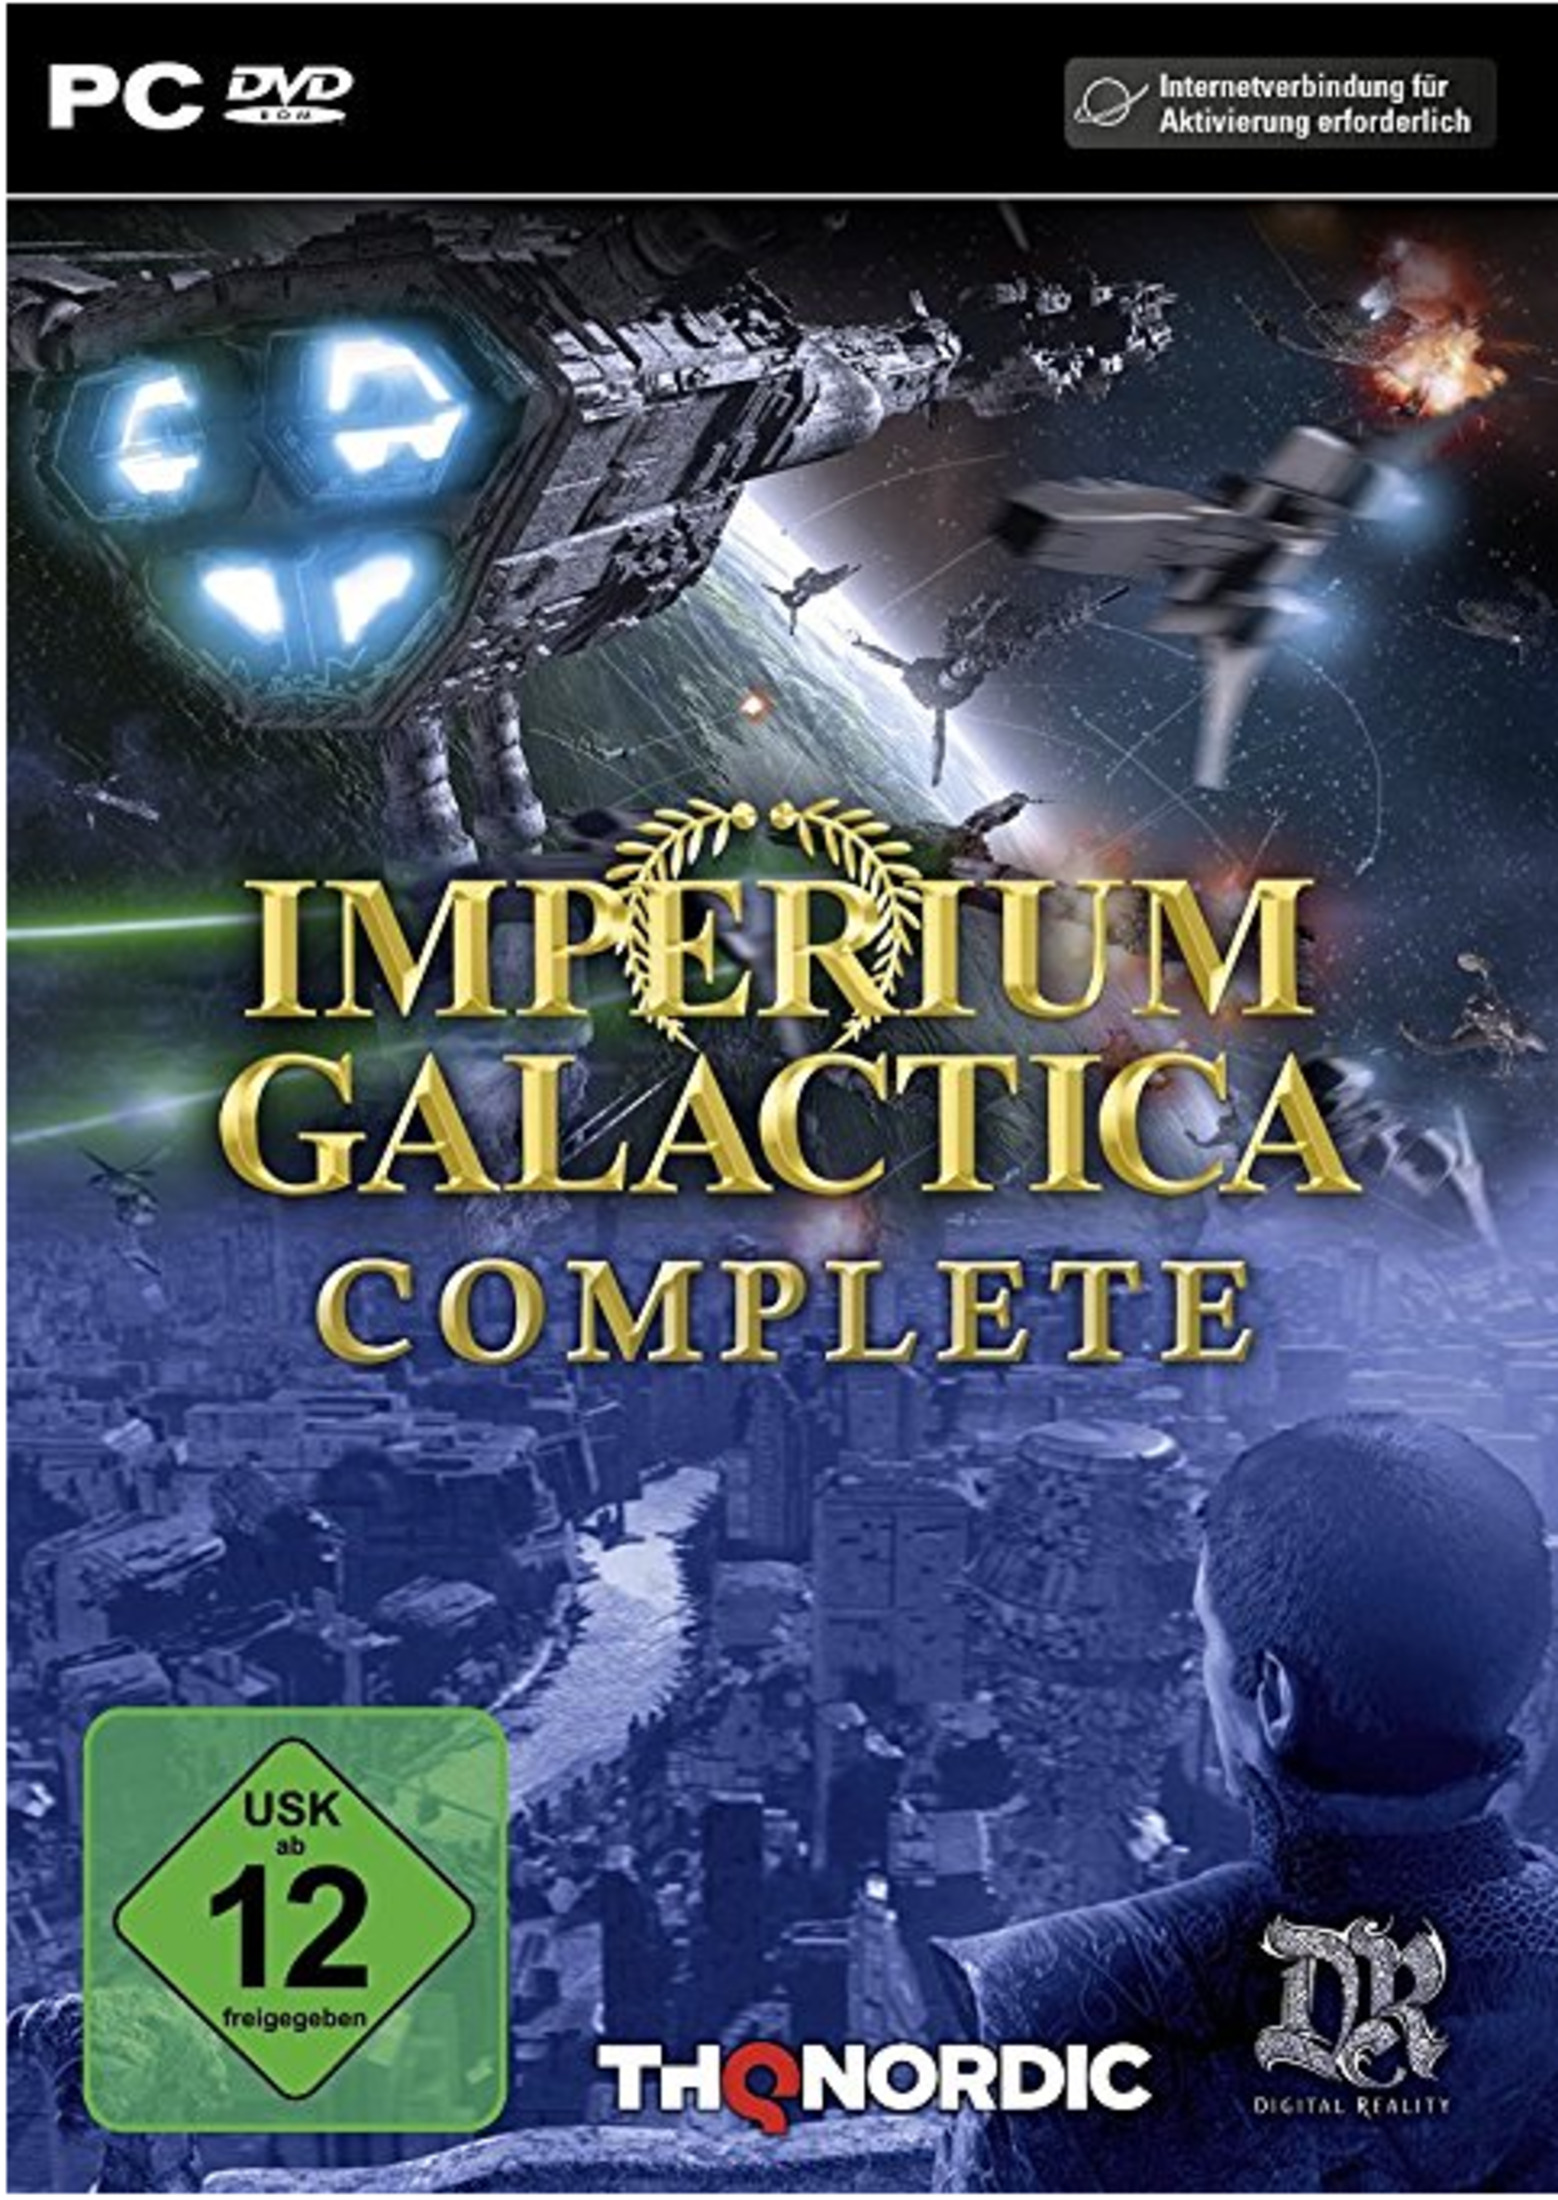 Imperium Galactica Collection Complete - PC [PC]